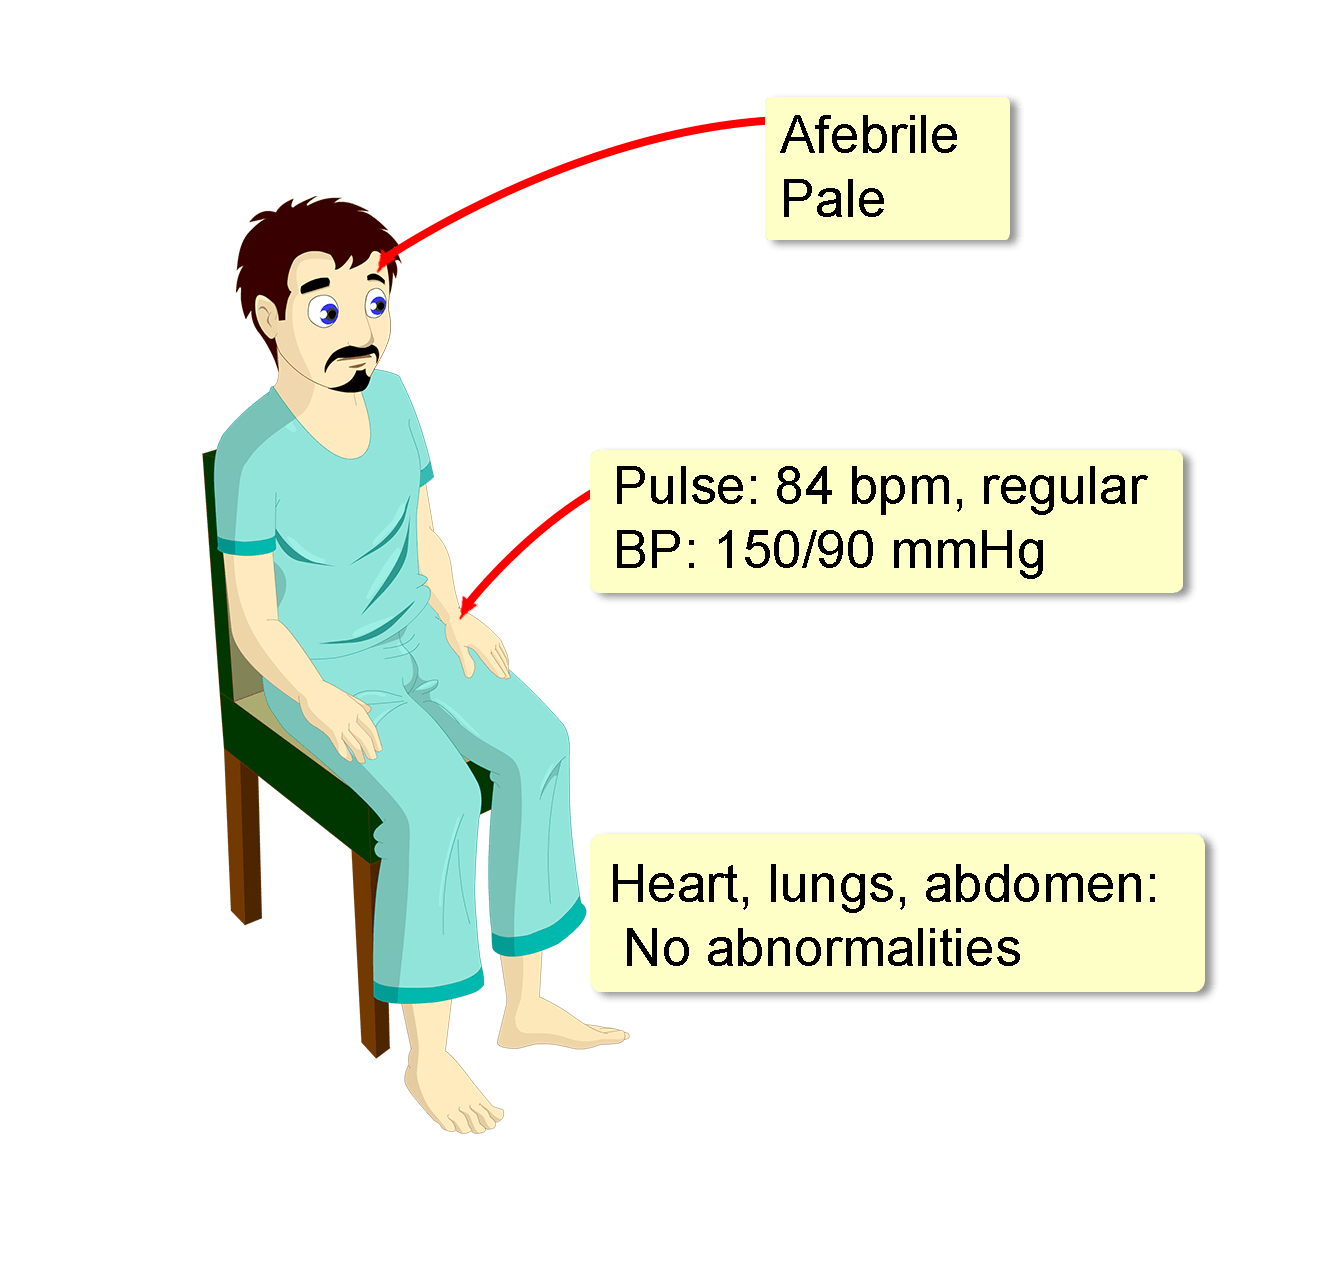 chronic pyelonephritis ultrasound